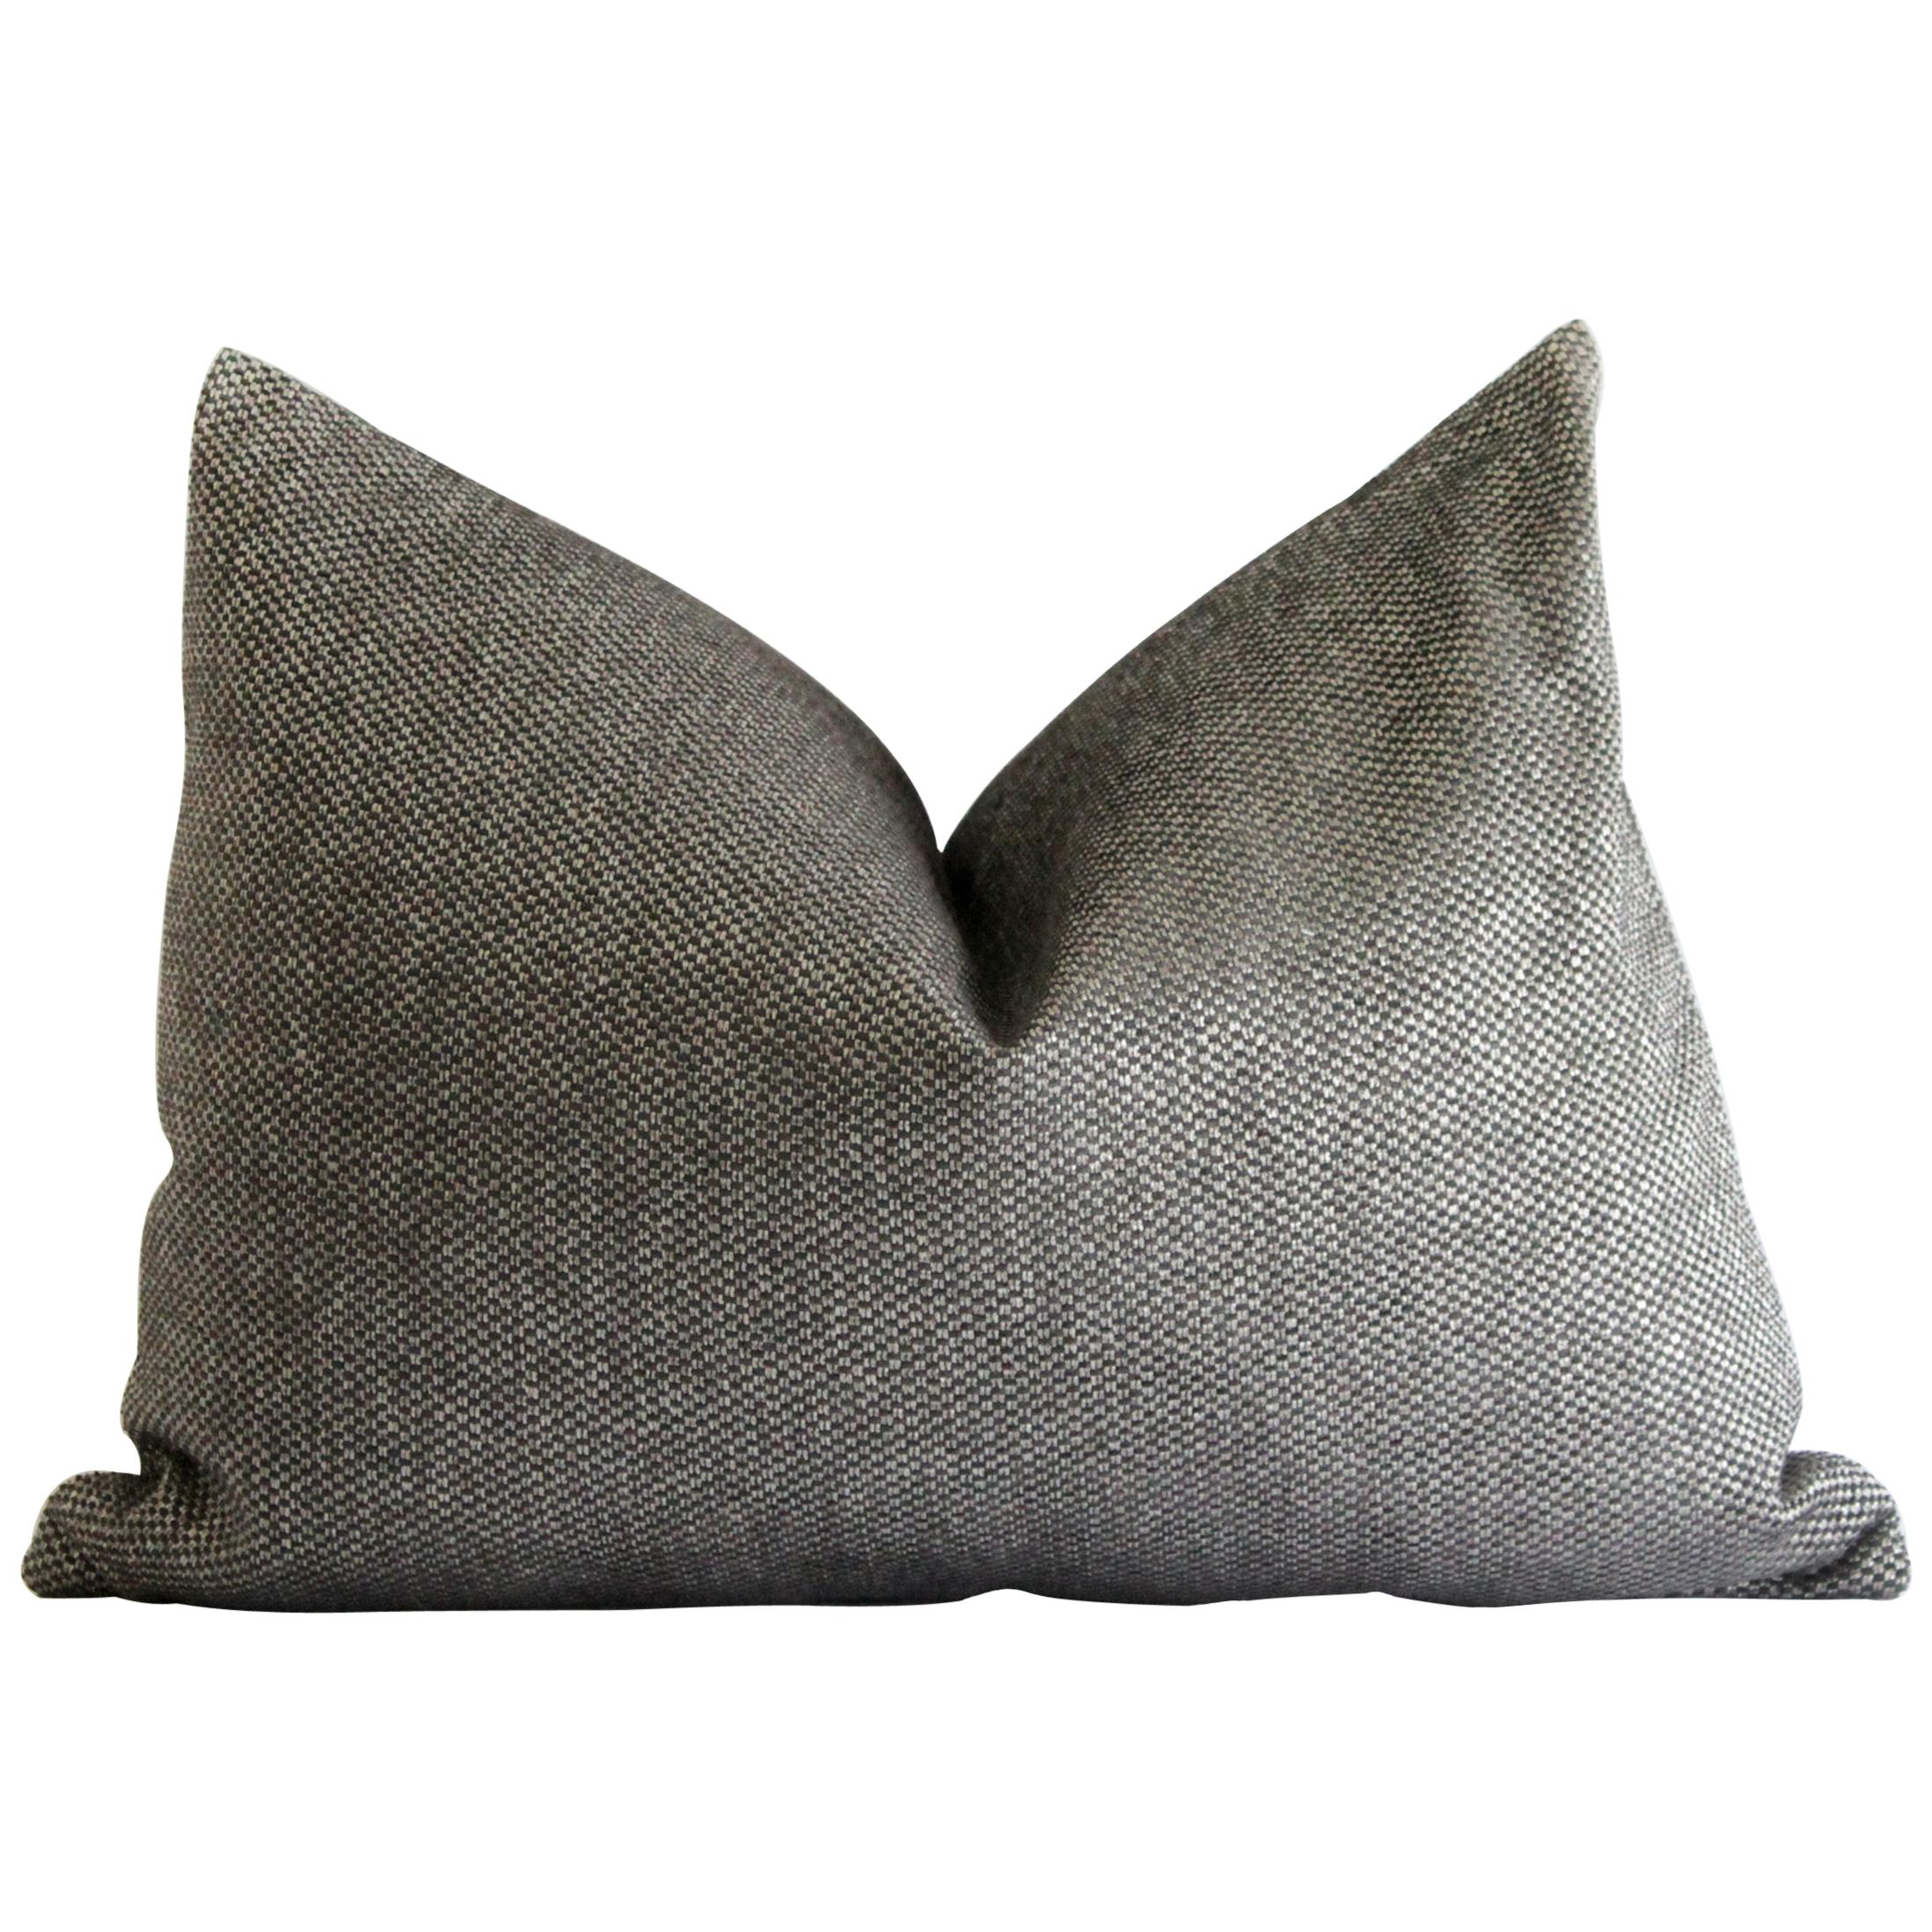 Custom Lumbar Pillow in Black and Silver Gray Woven Fabric